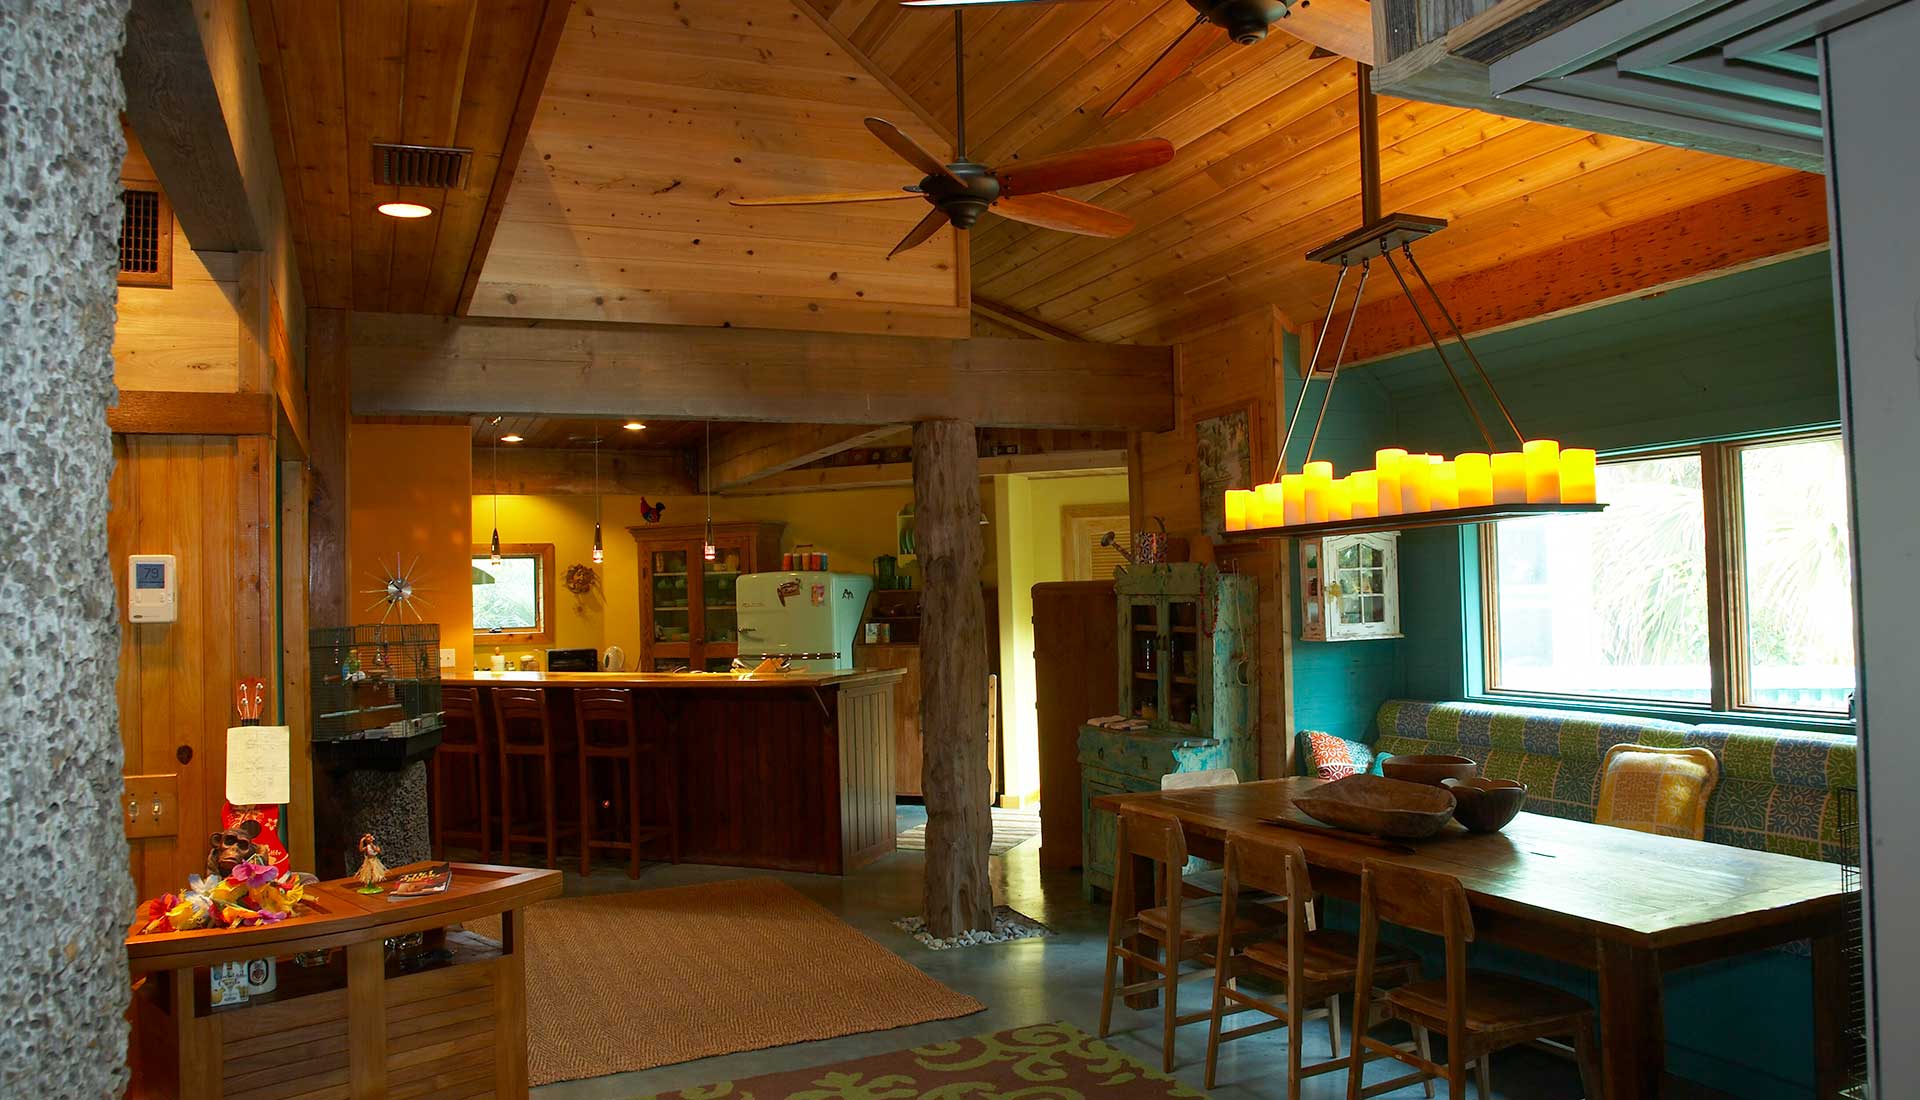 Florida Cottage Remodel Interior Dining